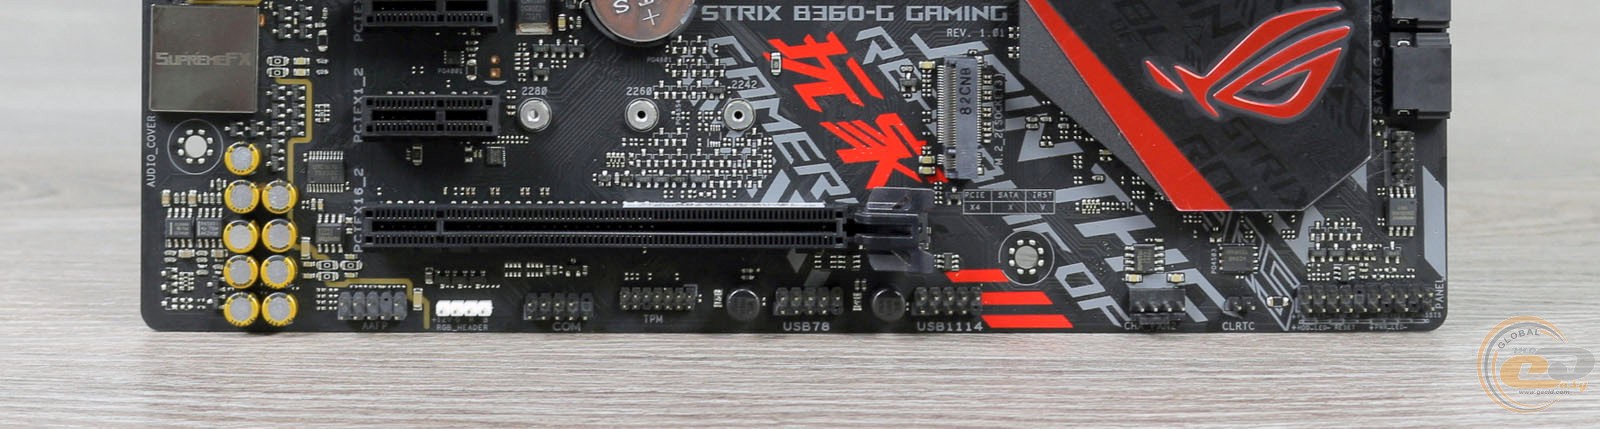 Strix b360 g gaming. ASUS ROG Strix b360-g. ASUS ROG передняя панель. Джампер ROG Strix. Strix 8360-g Gaming.